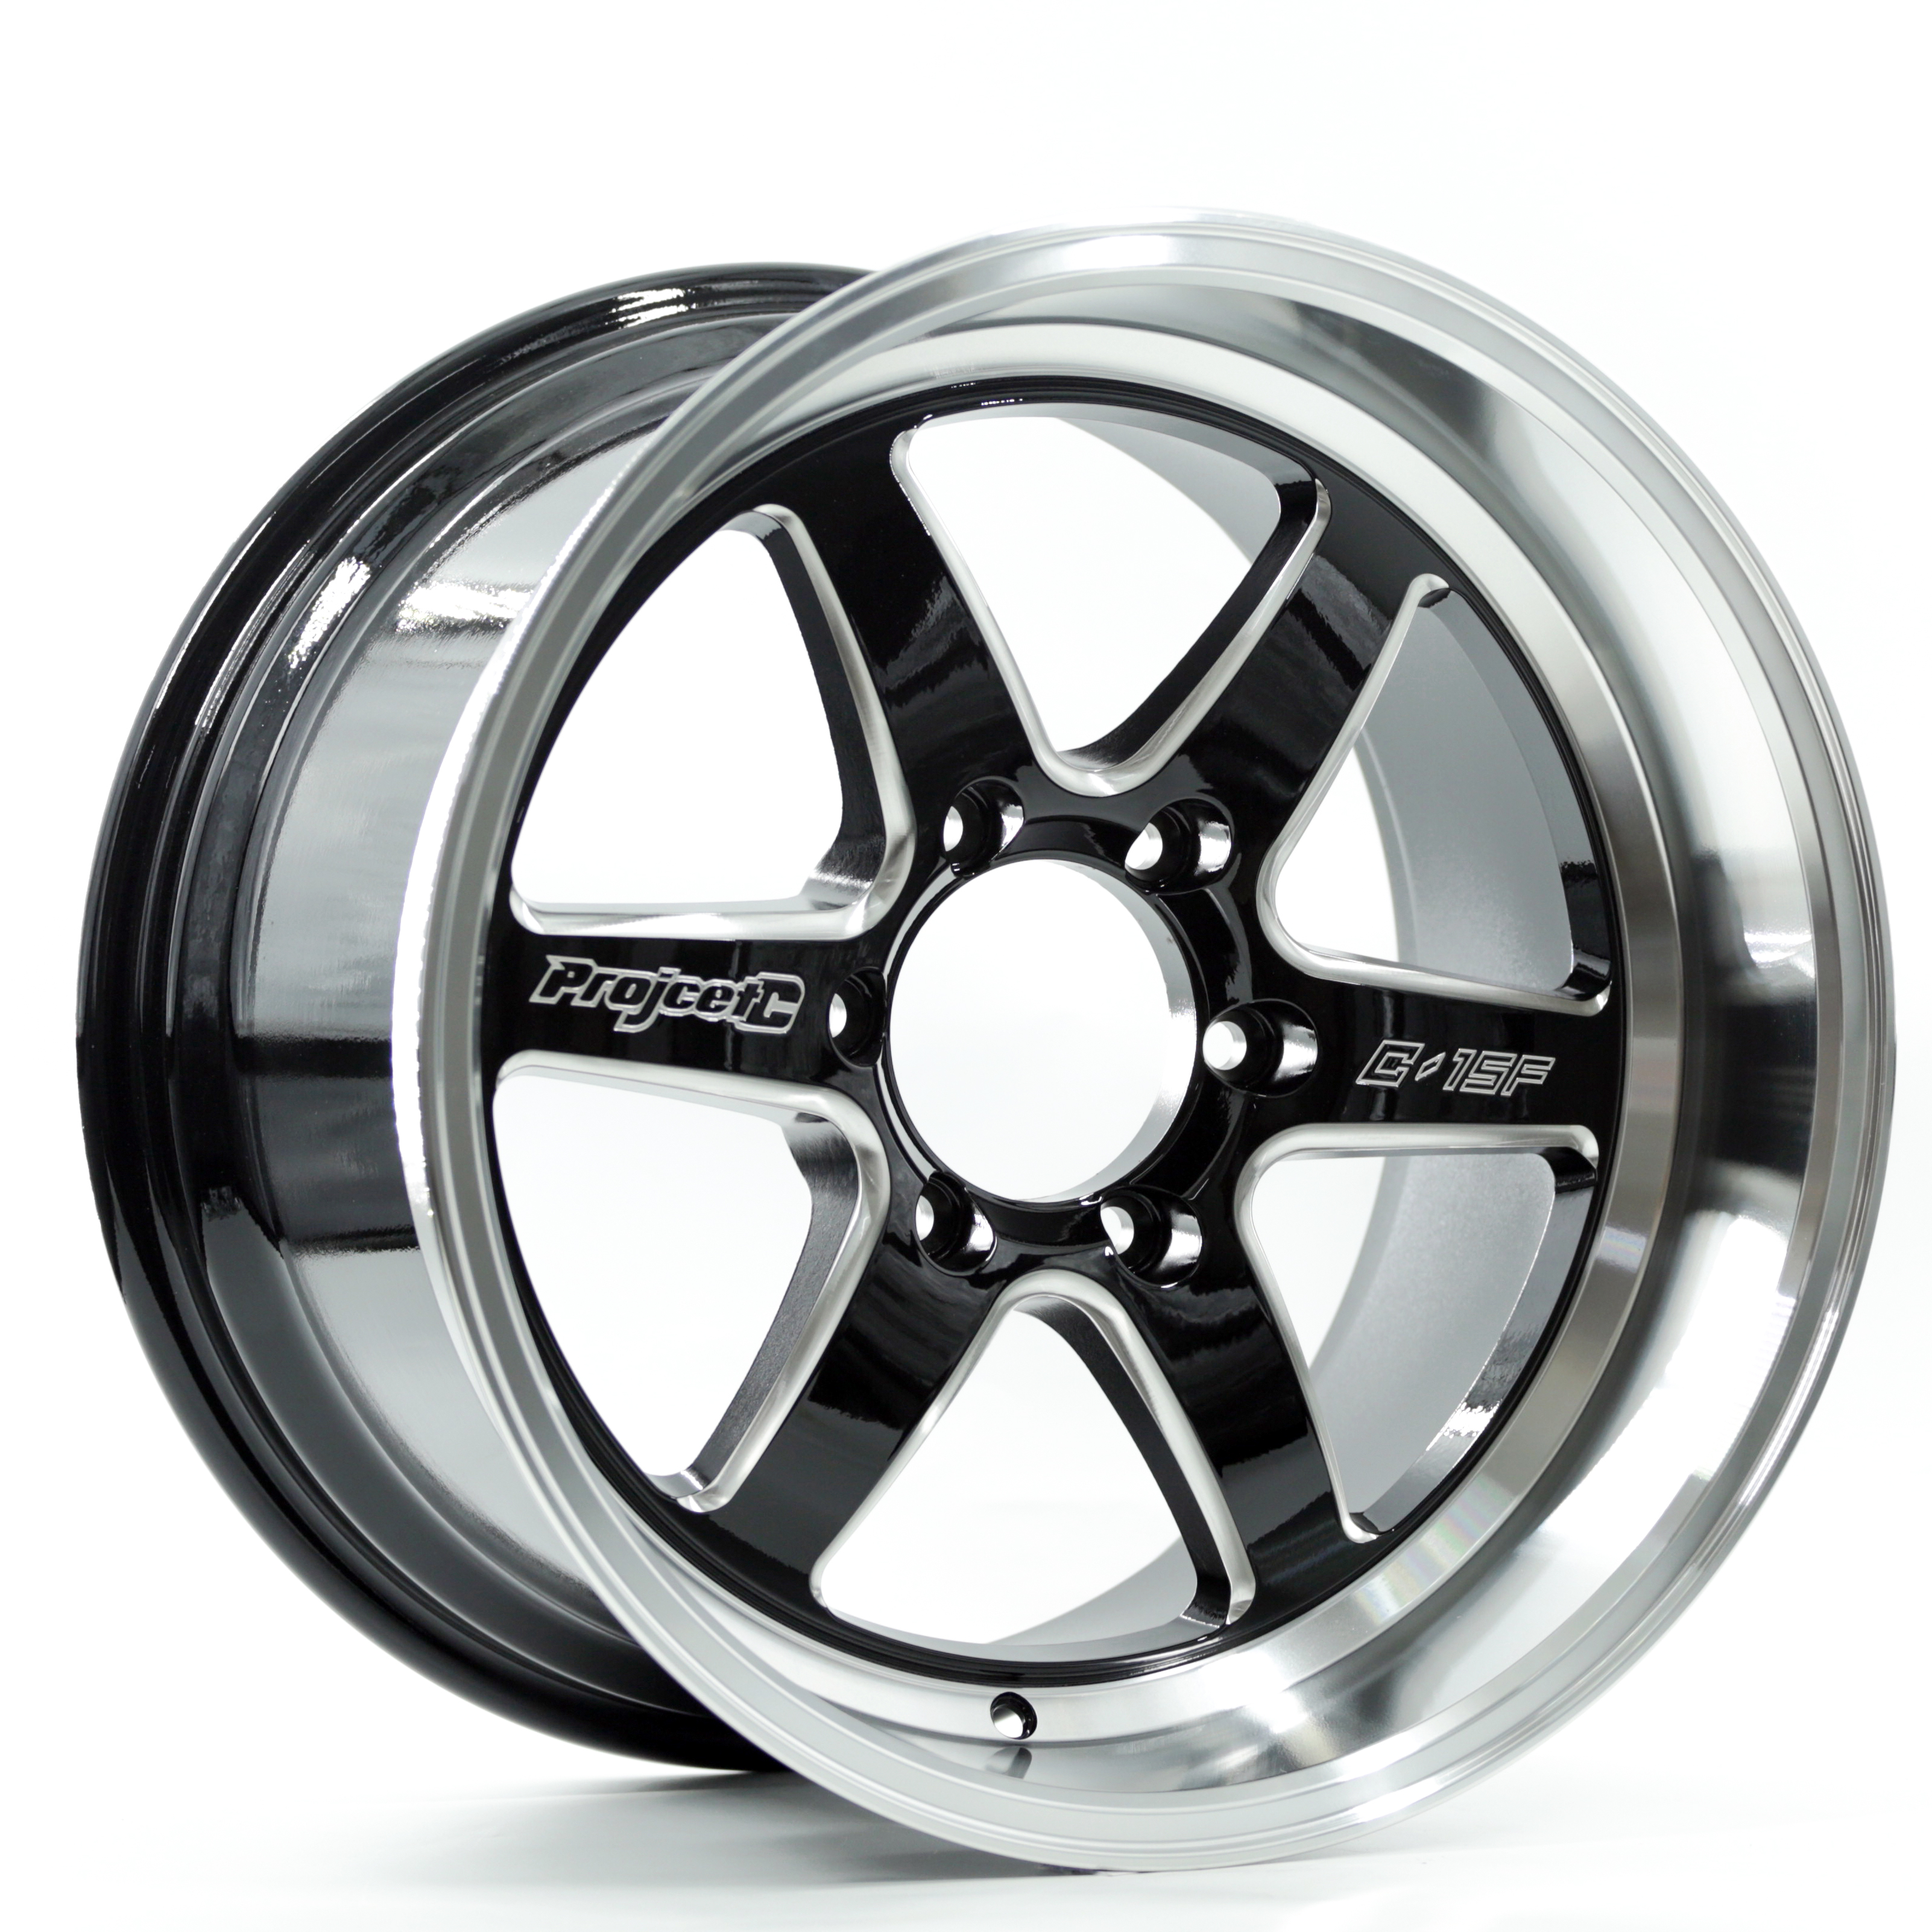 Rayone Wheels Factory Aluminum Alloy Wheels 18inch 6×139.7 Popular Design Hot Sale In Thailand Market